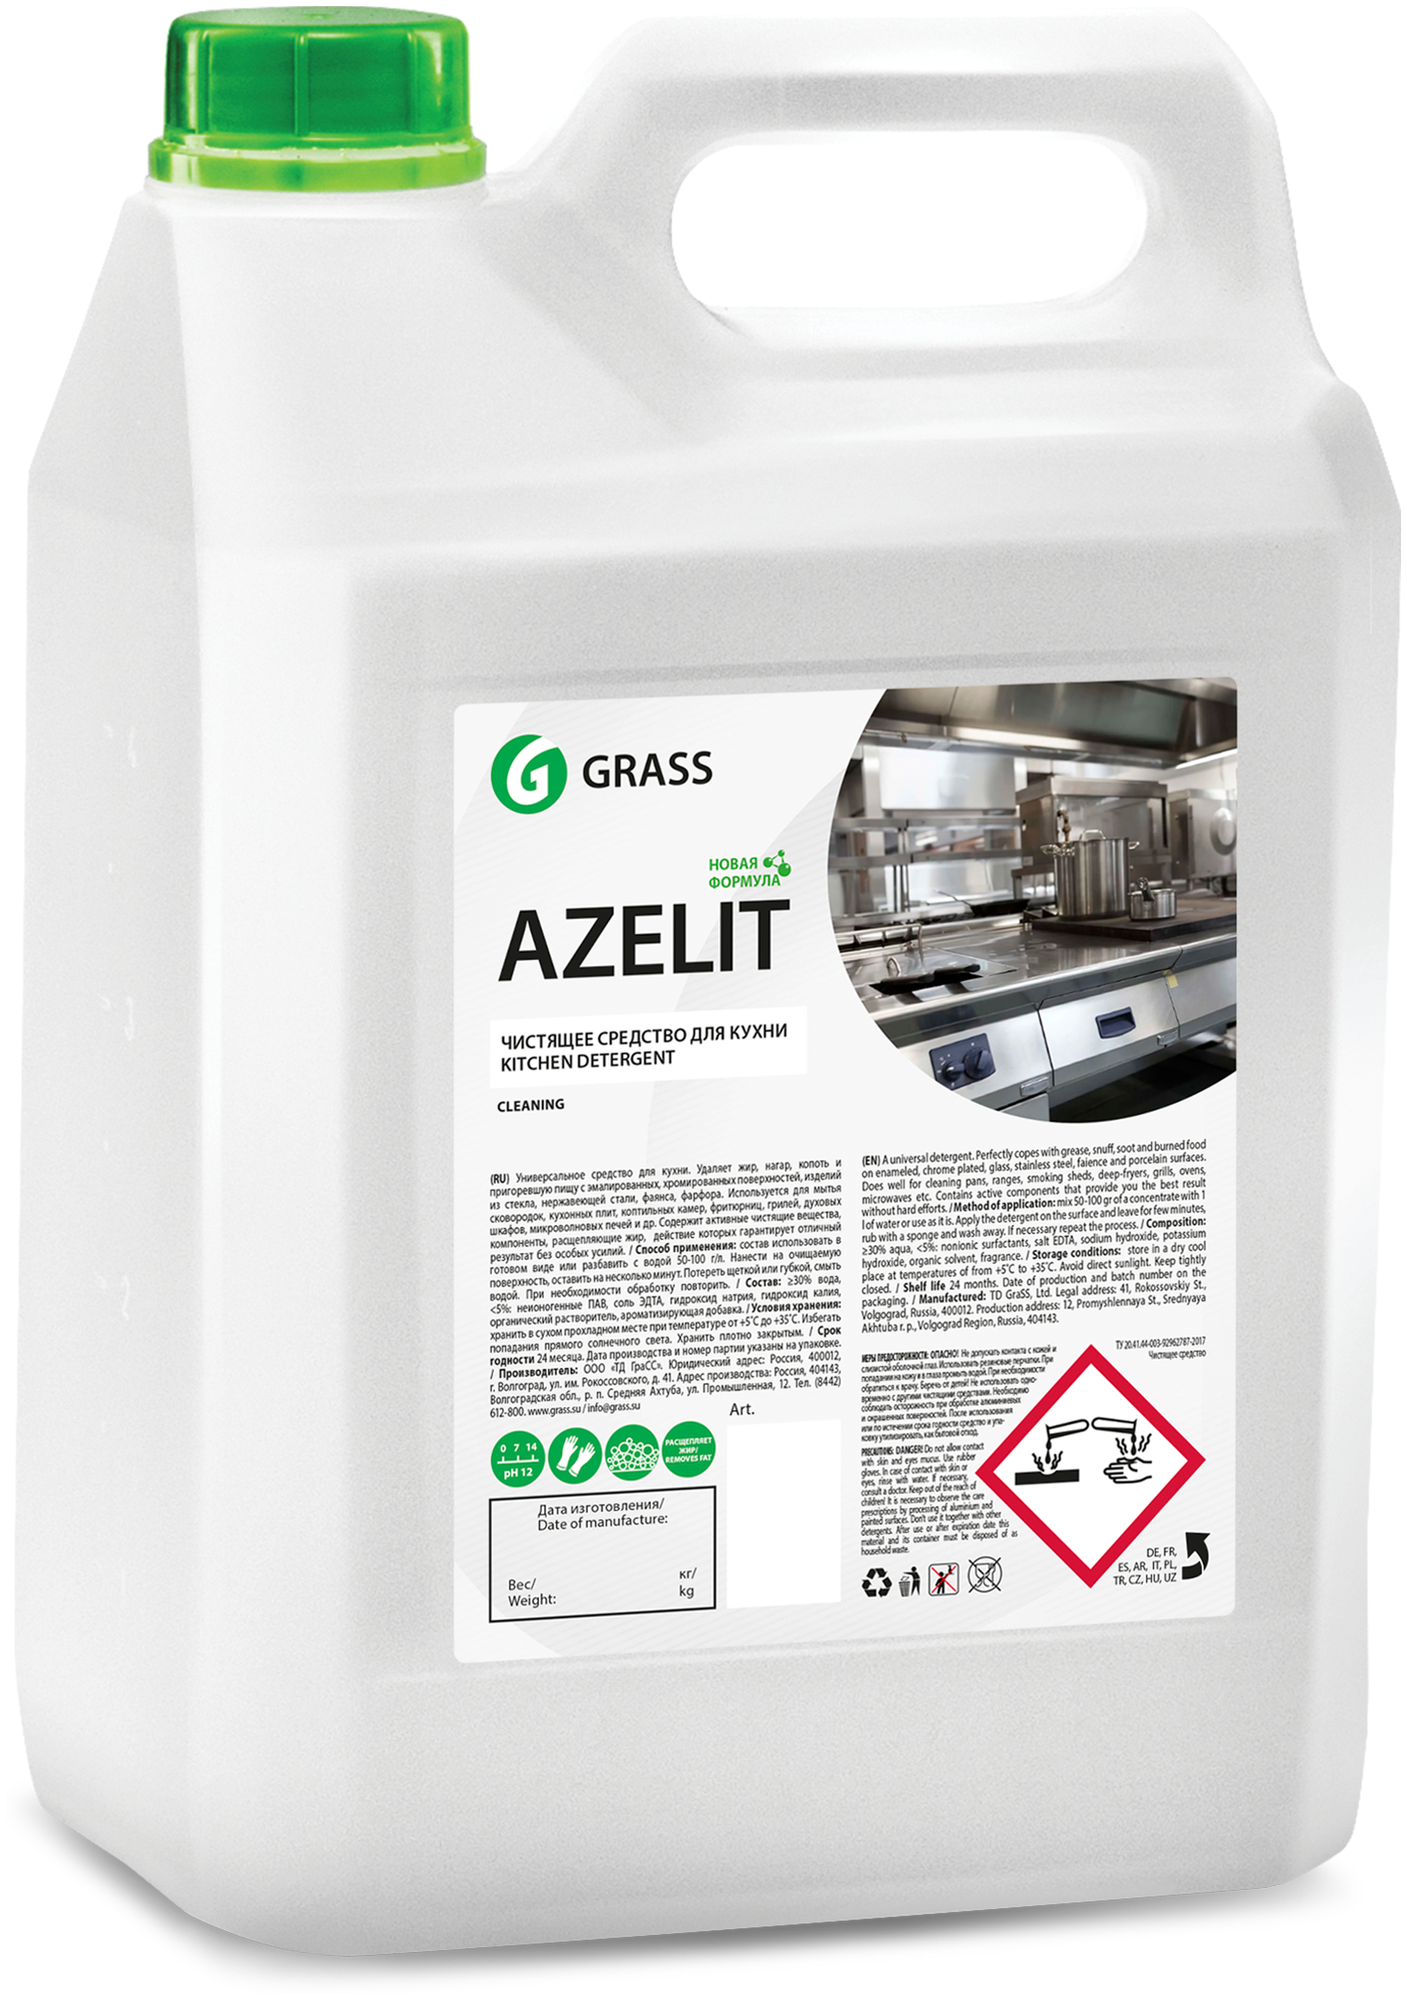 Антижир Азелит Grass AZELIT Анти жир жироудалитель средство жидкость для удаления жира для кухни 5л